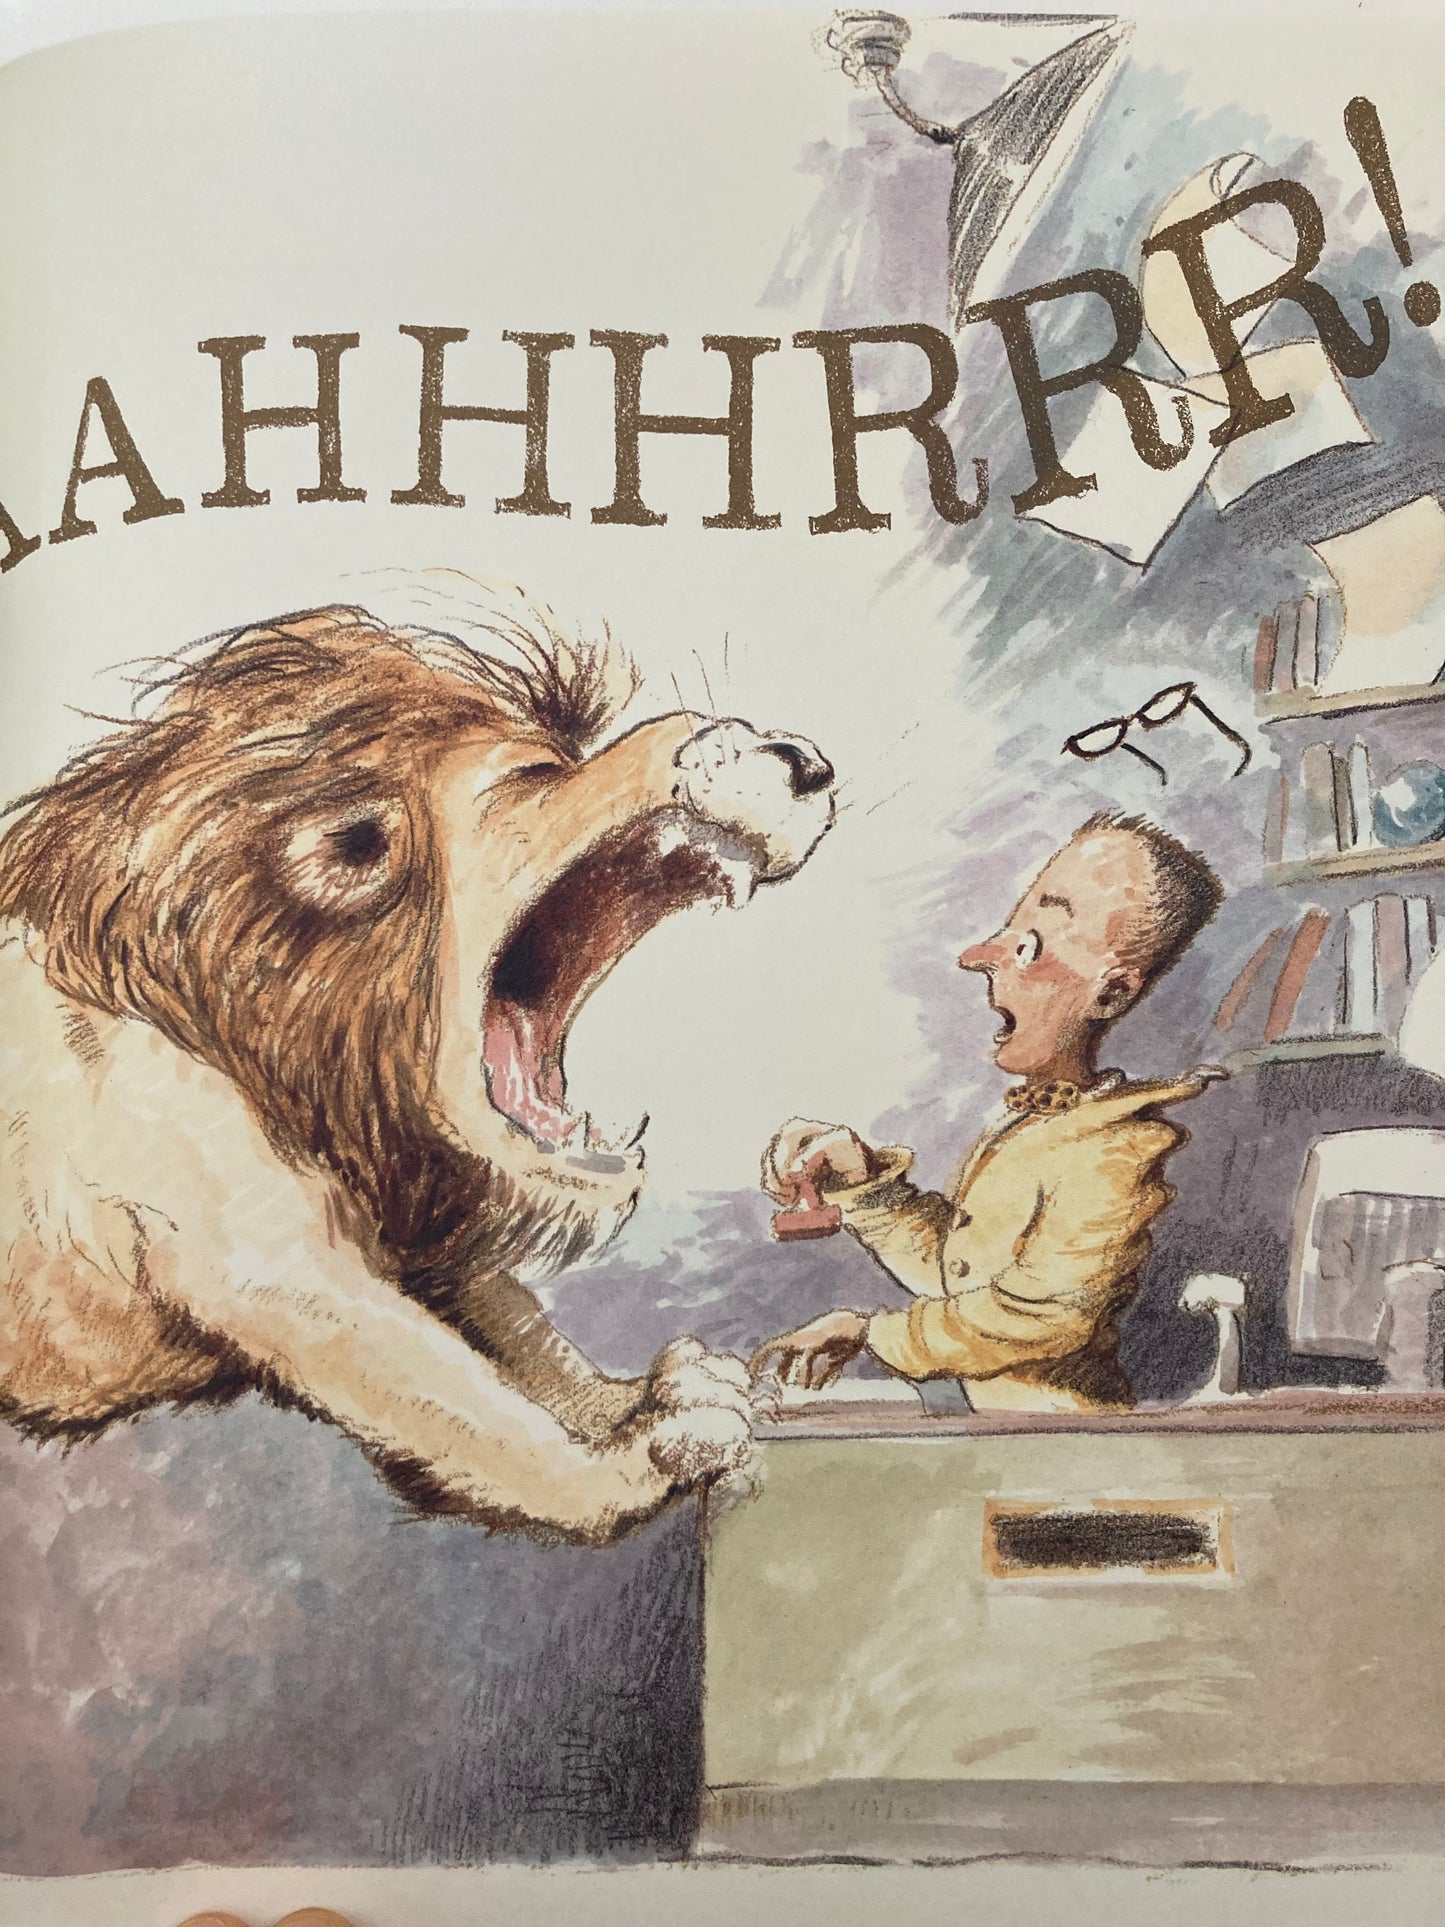 Children's Picture Book - LIBRARY LION